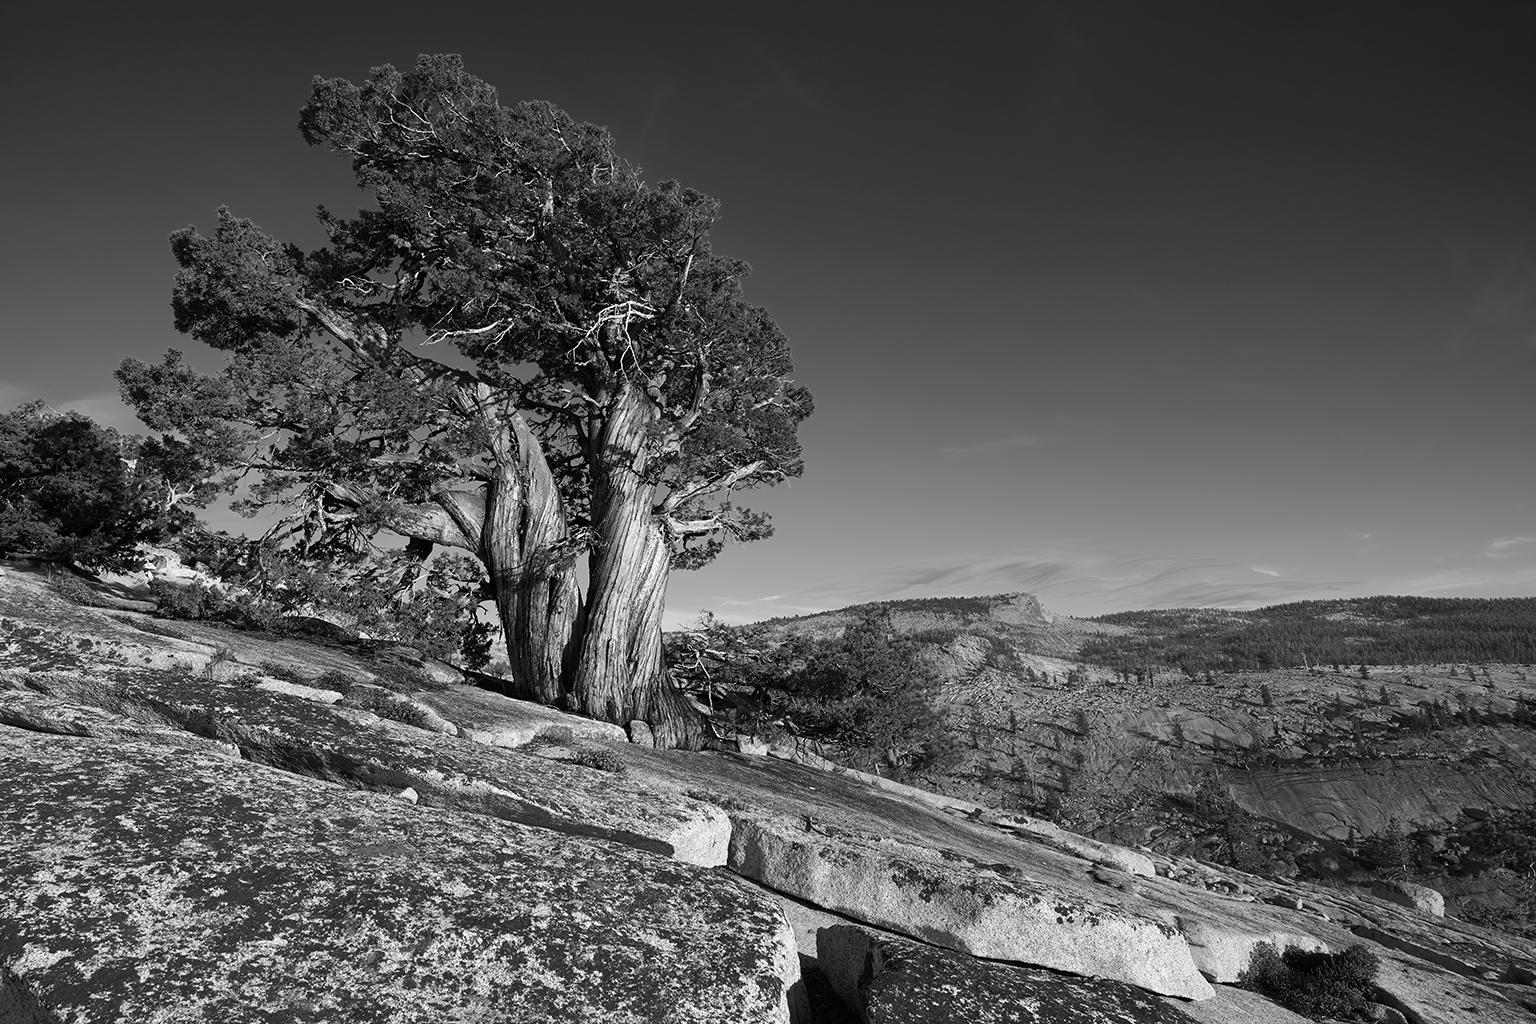 Tree Study II – Großformatige Fotografie einer dramatischen Berglandschaft